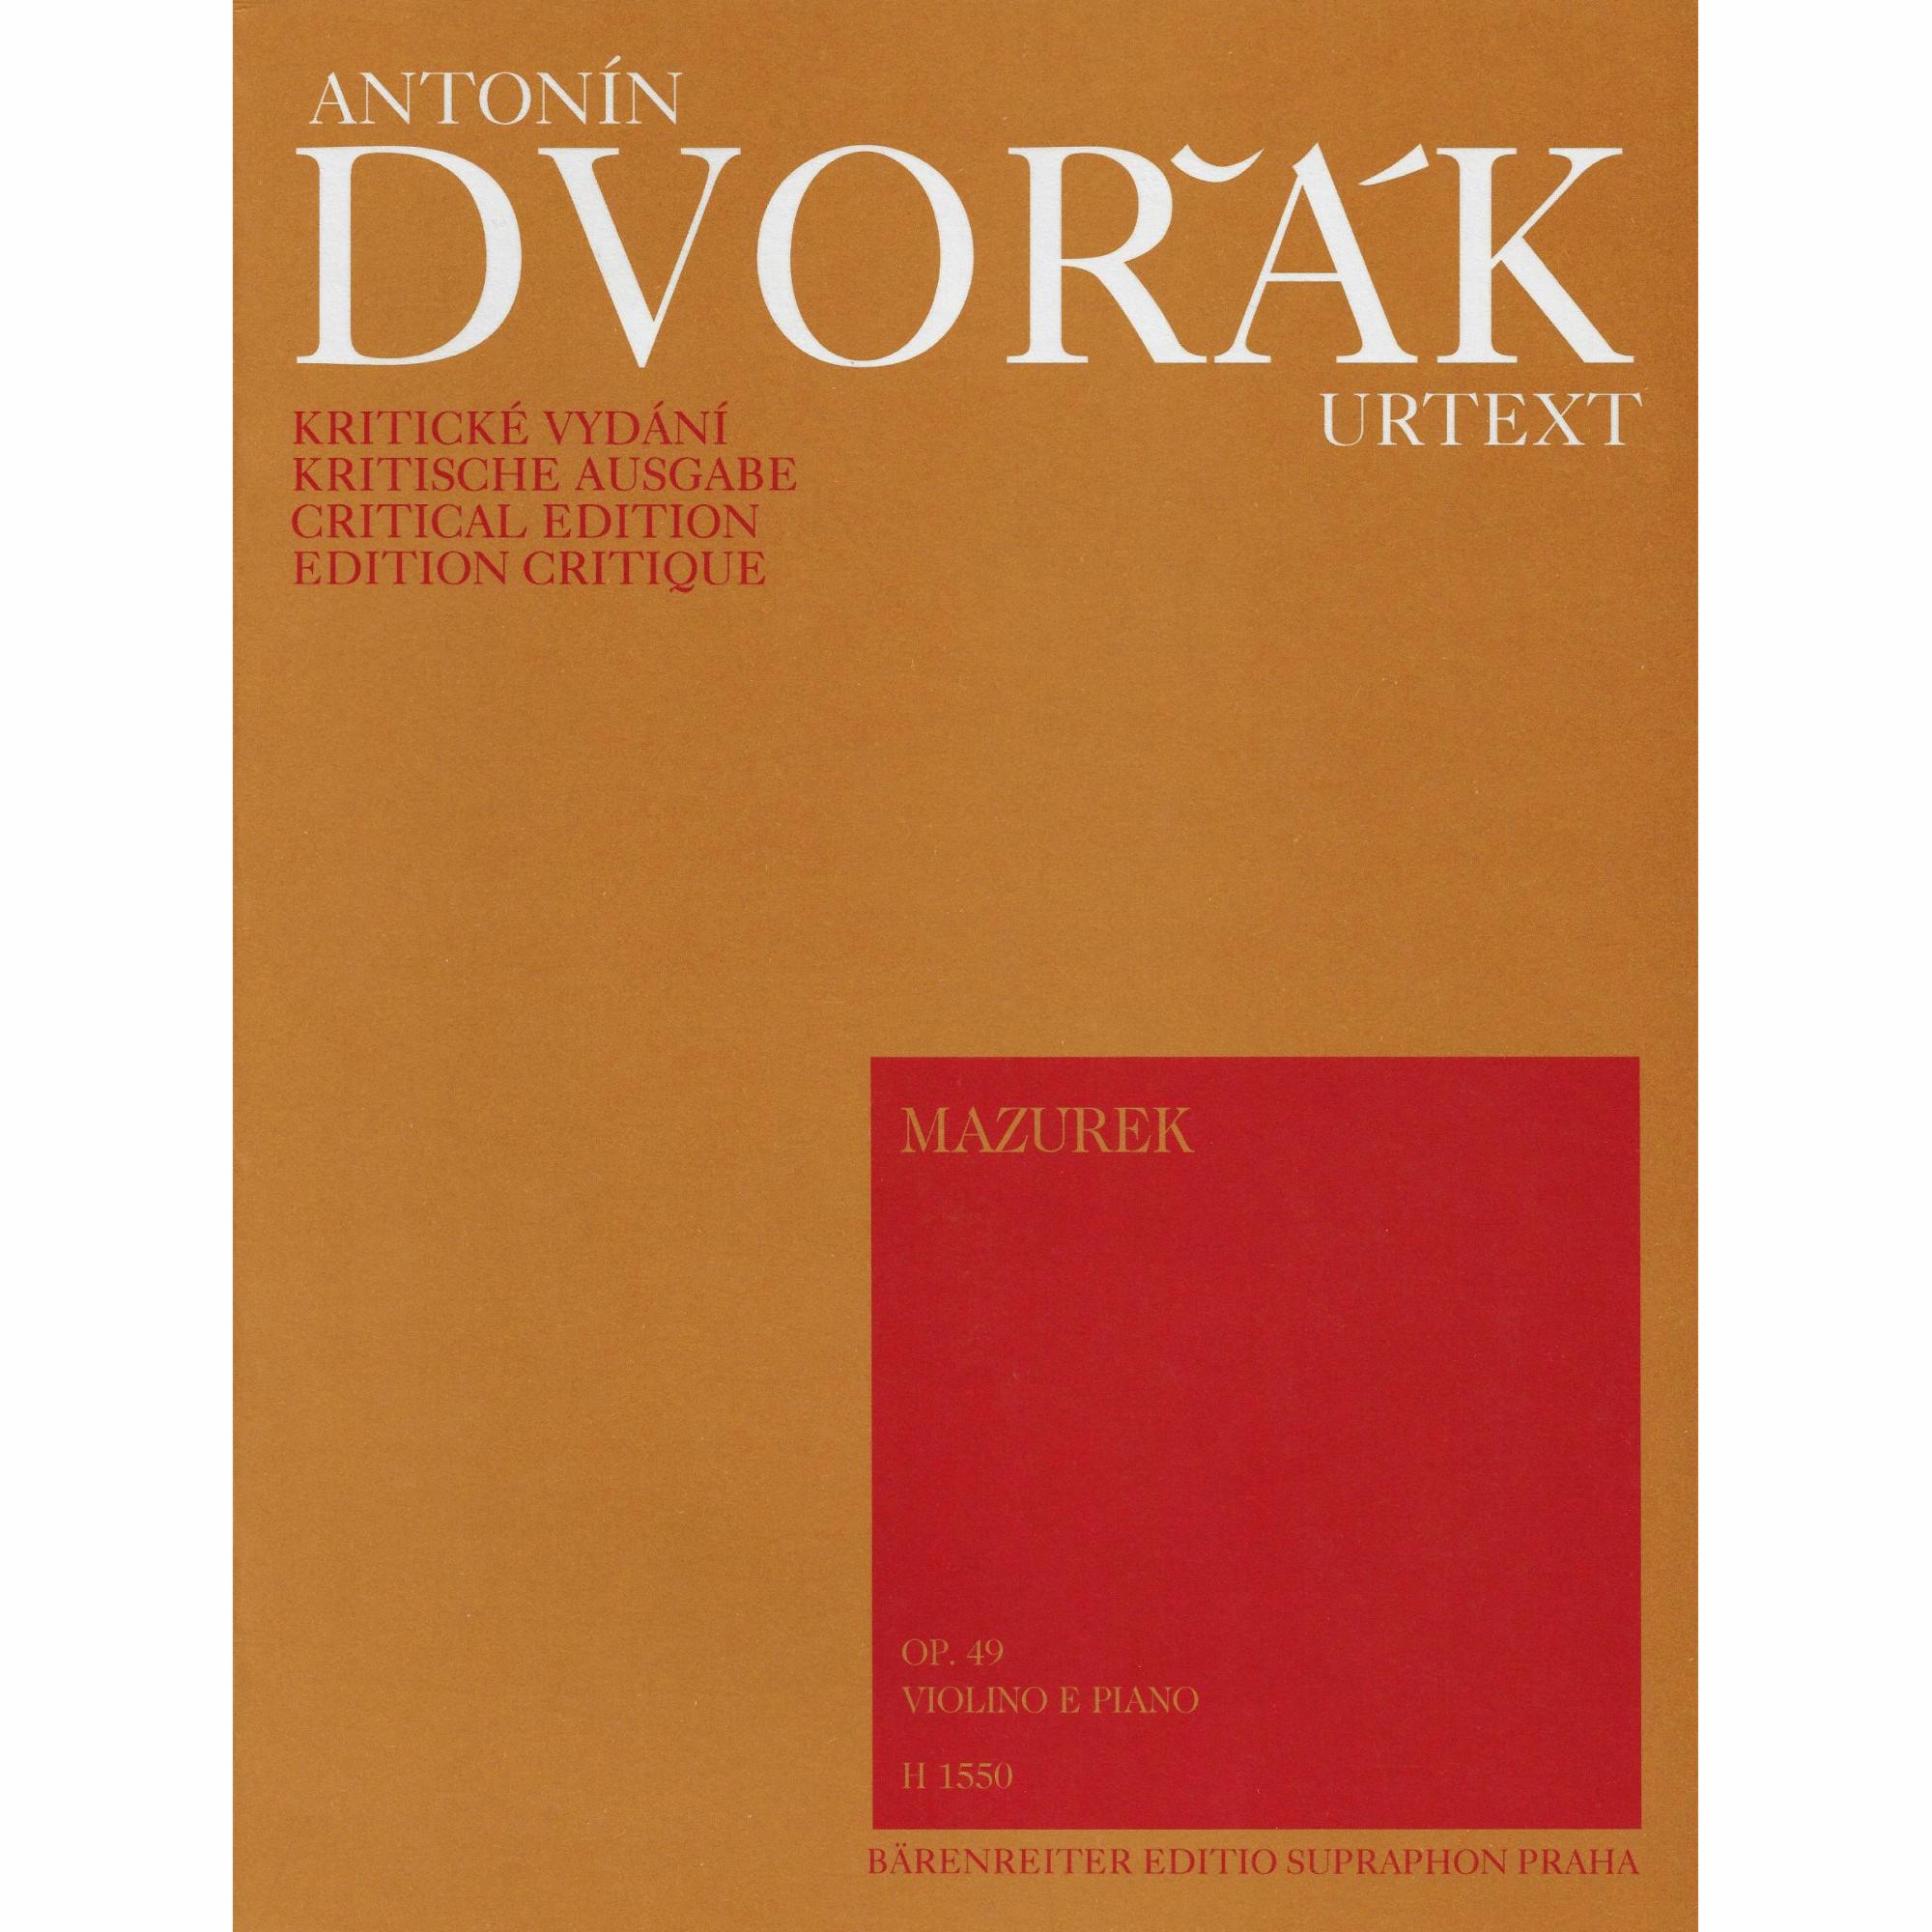 Dvorak -- Mazurka, Op. 49 for Violin and Piano